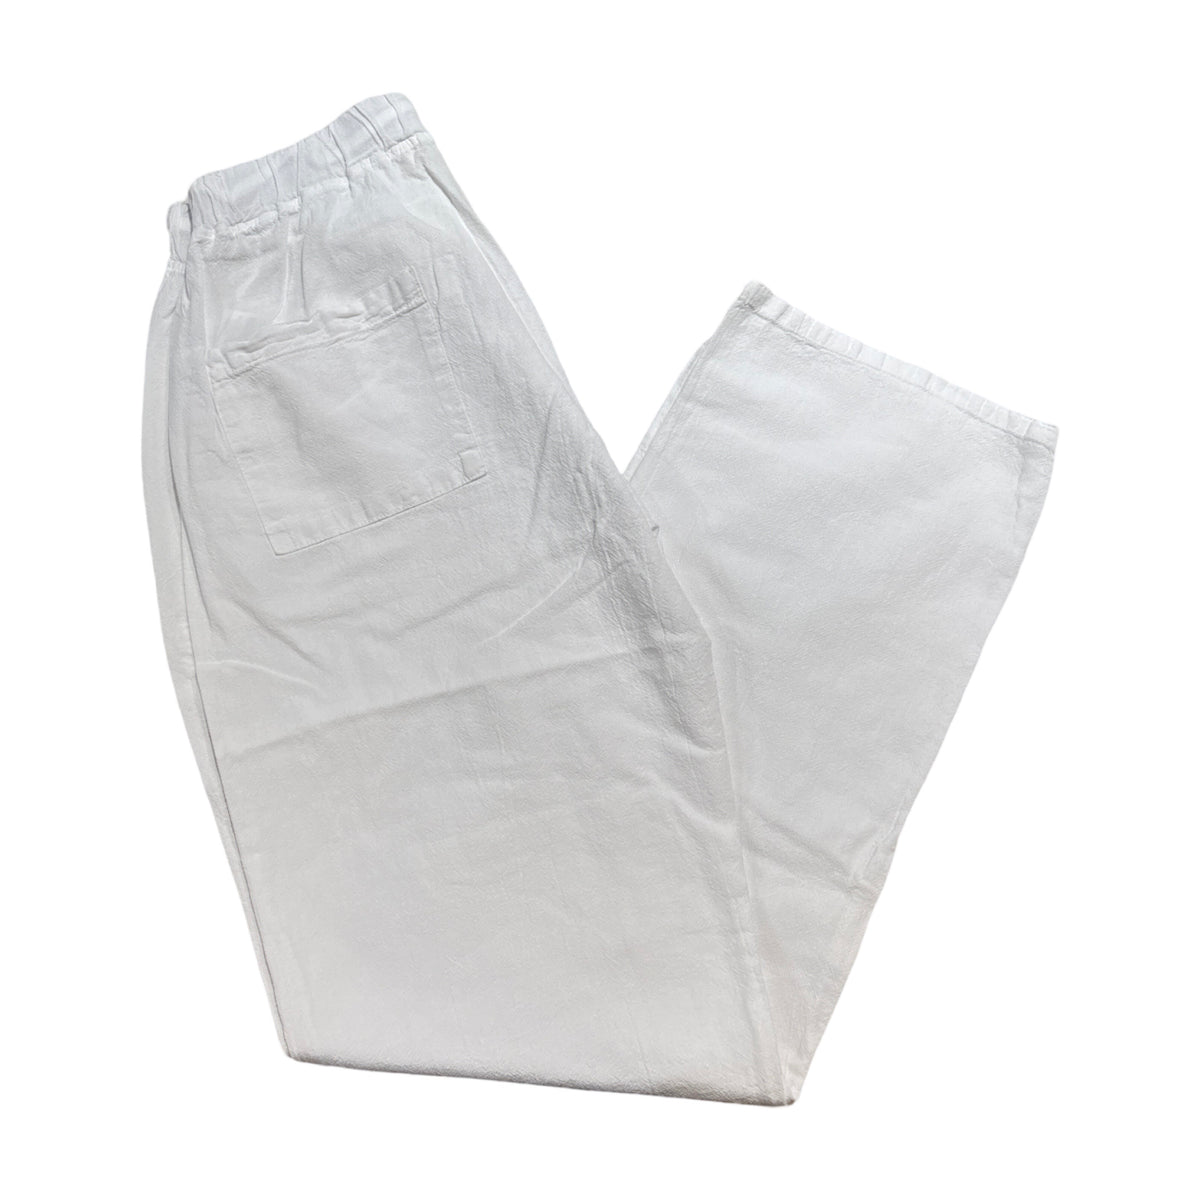 Seaspice White Double Pocket Peruvian Cotton Pants